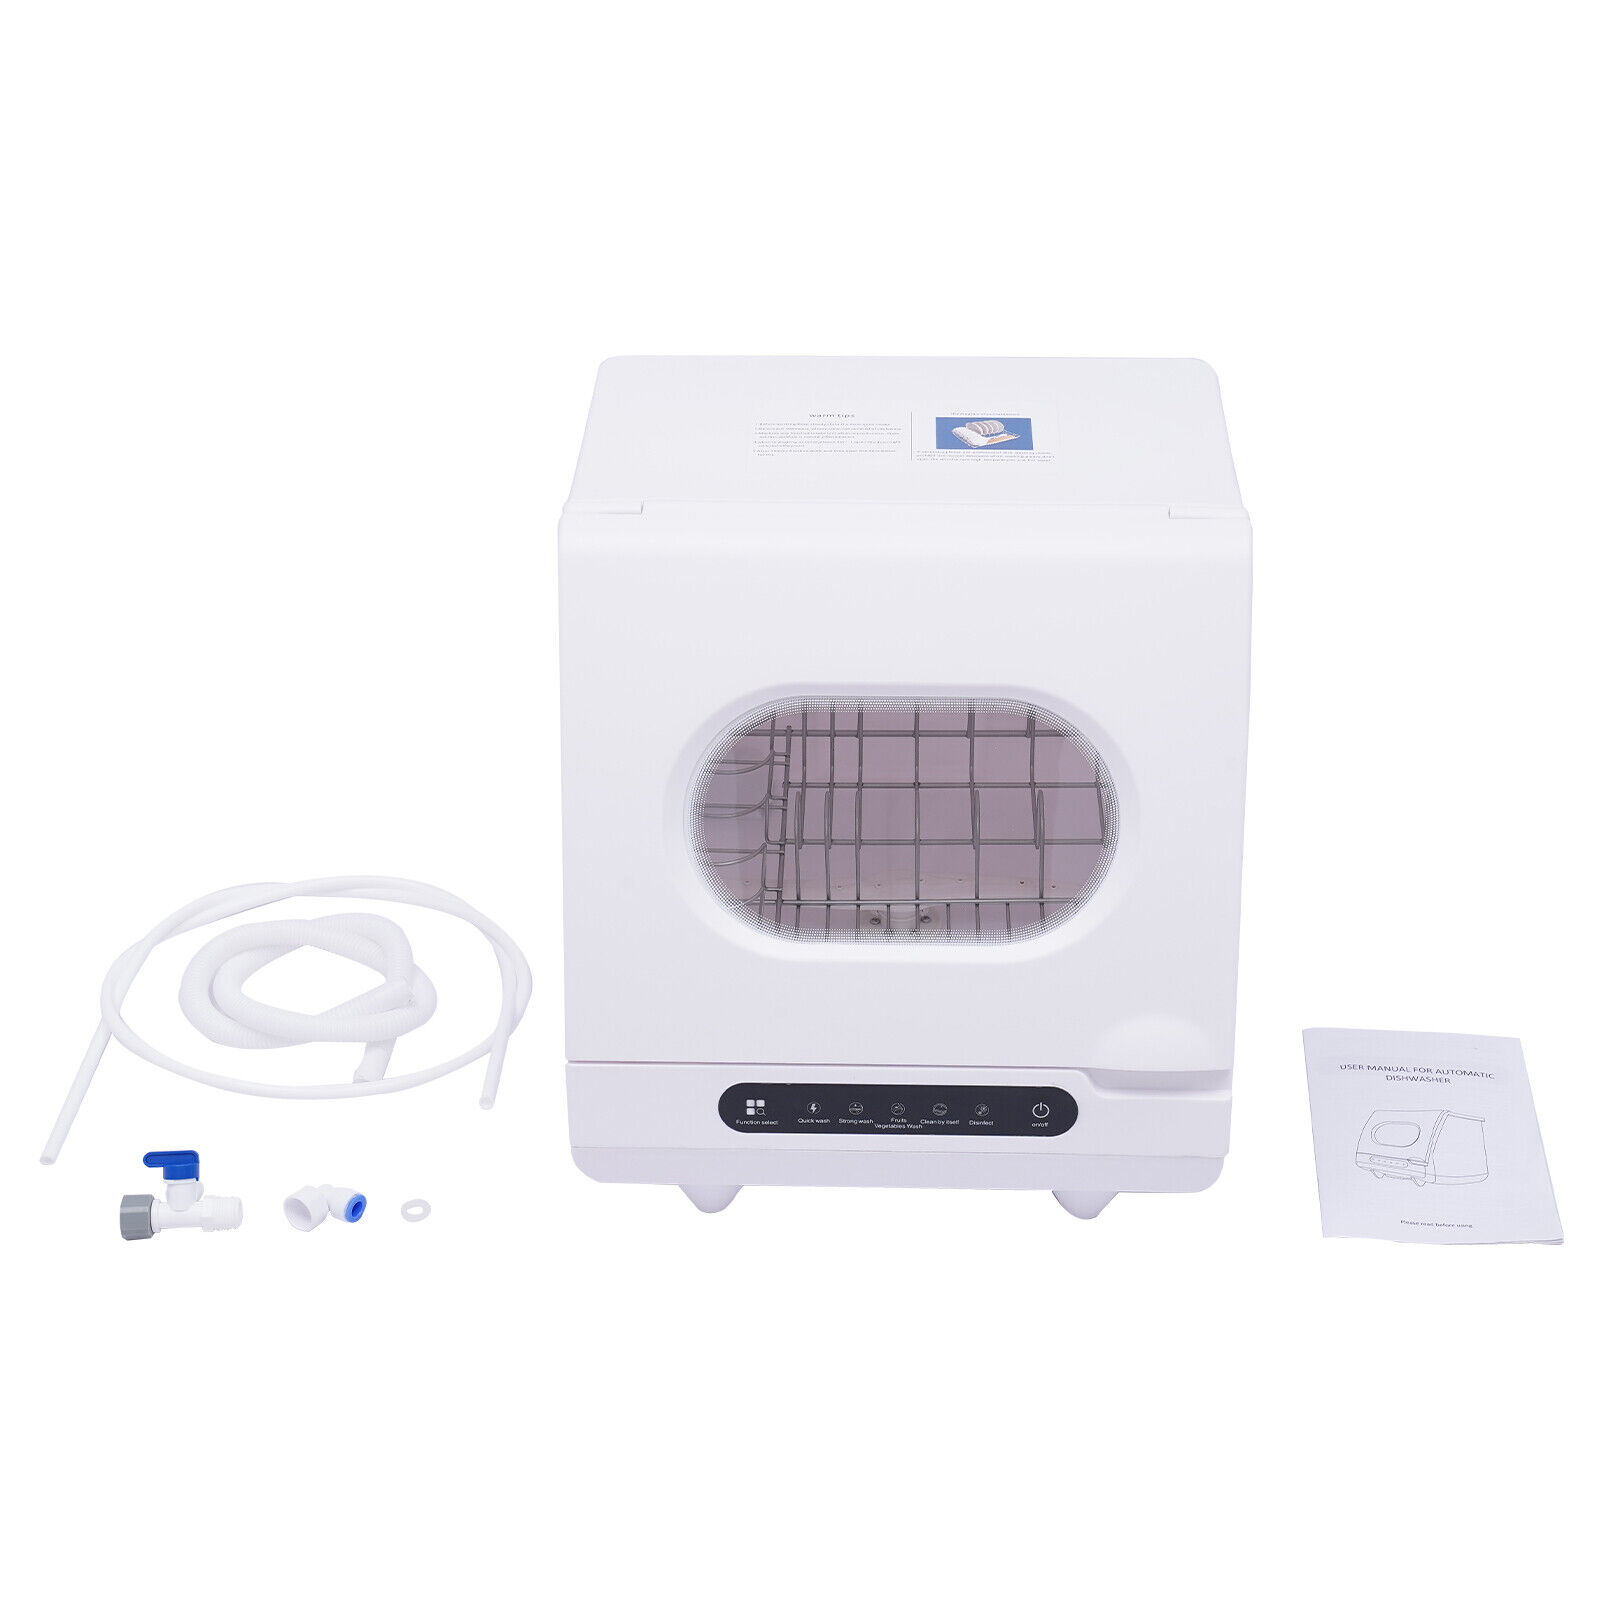 thinkstar White Portable Countertop Dishwasher Compact Dishwasher 5 Washing Program 1200W